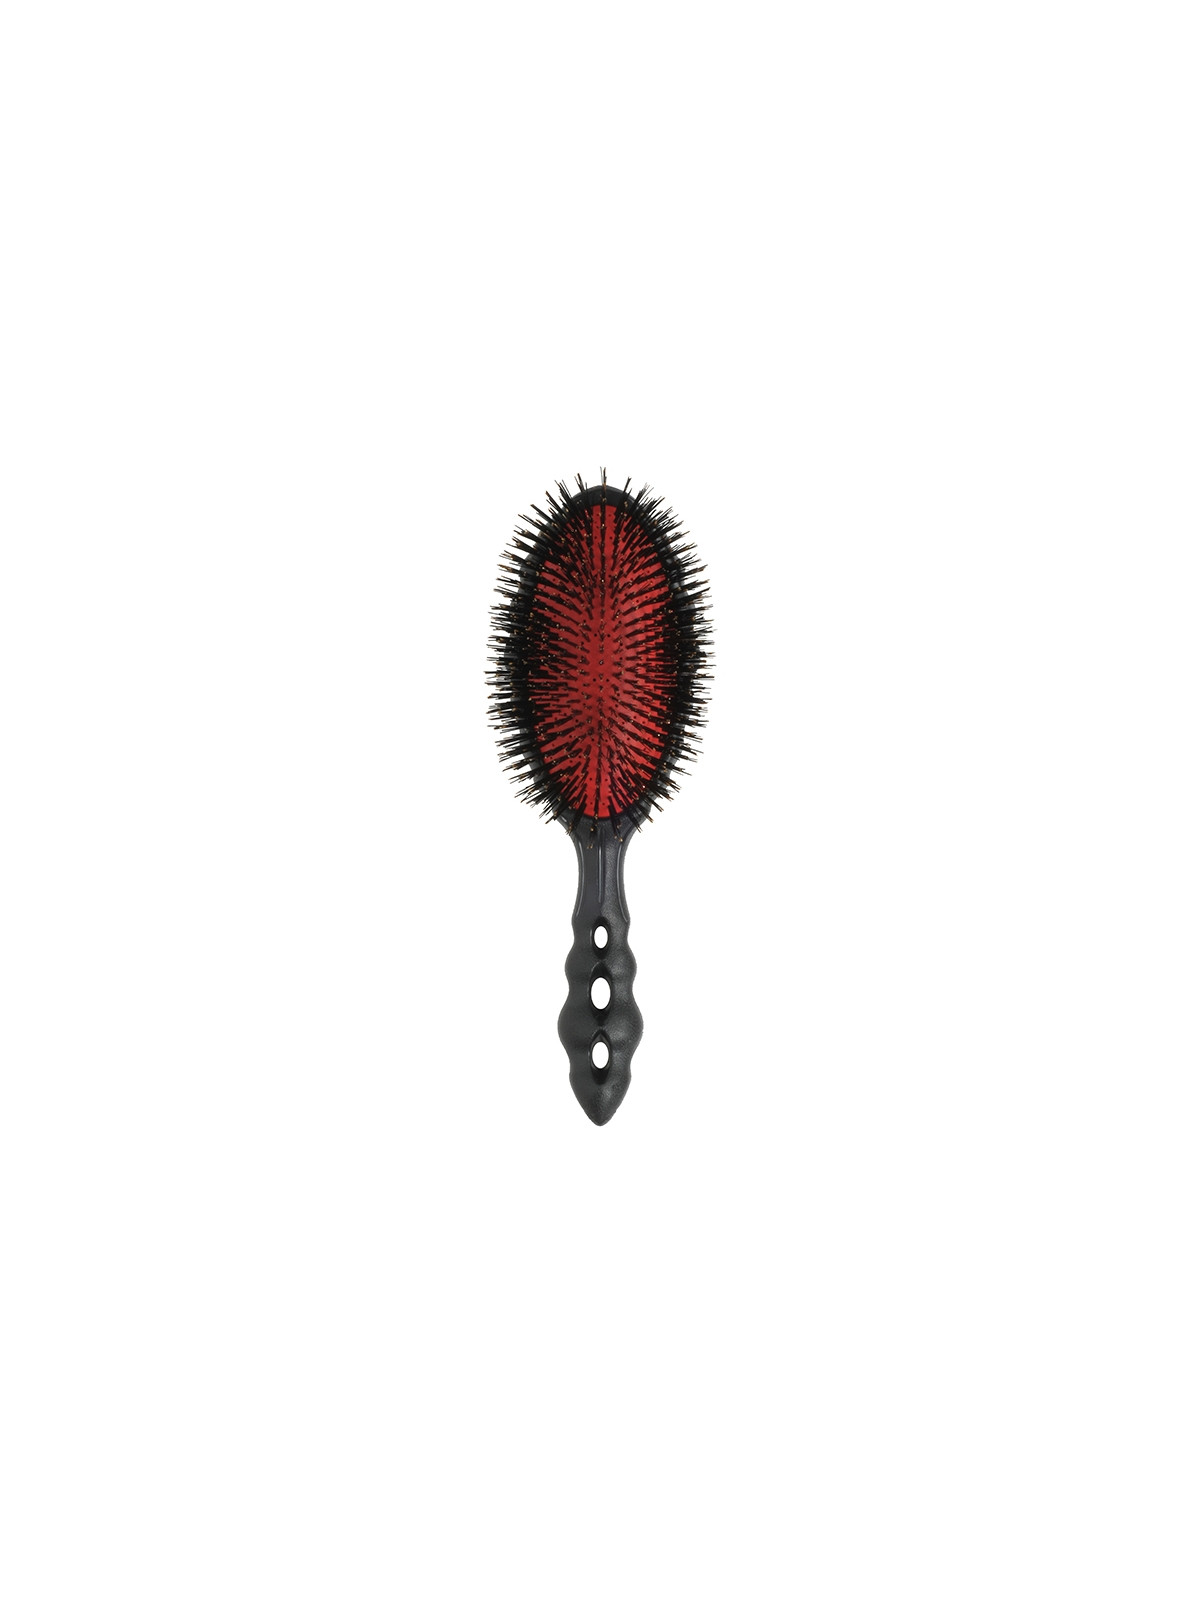 Y.S. Park Beetle Hairbrush 100% Boar